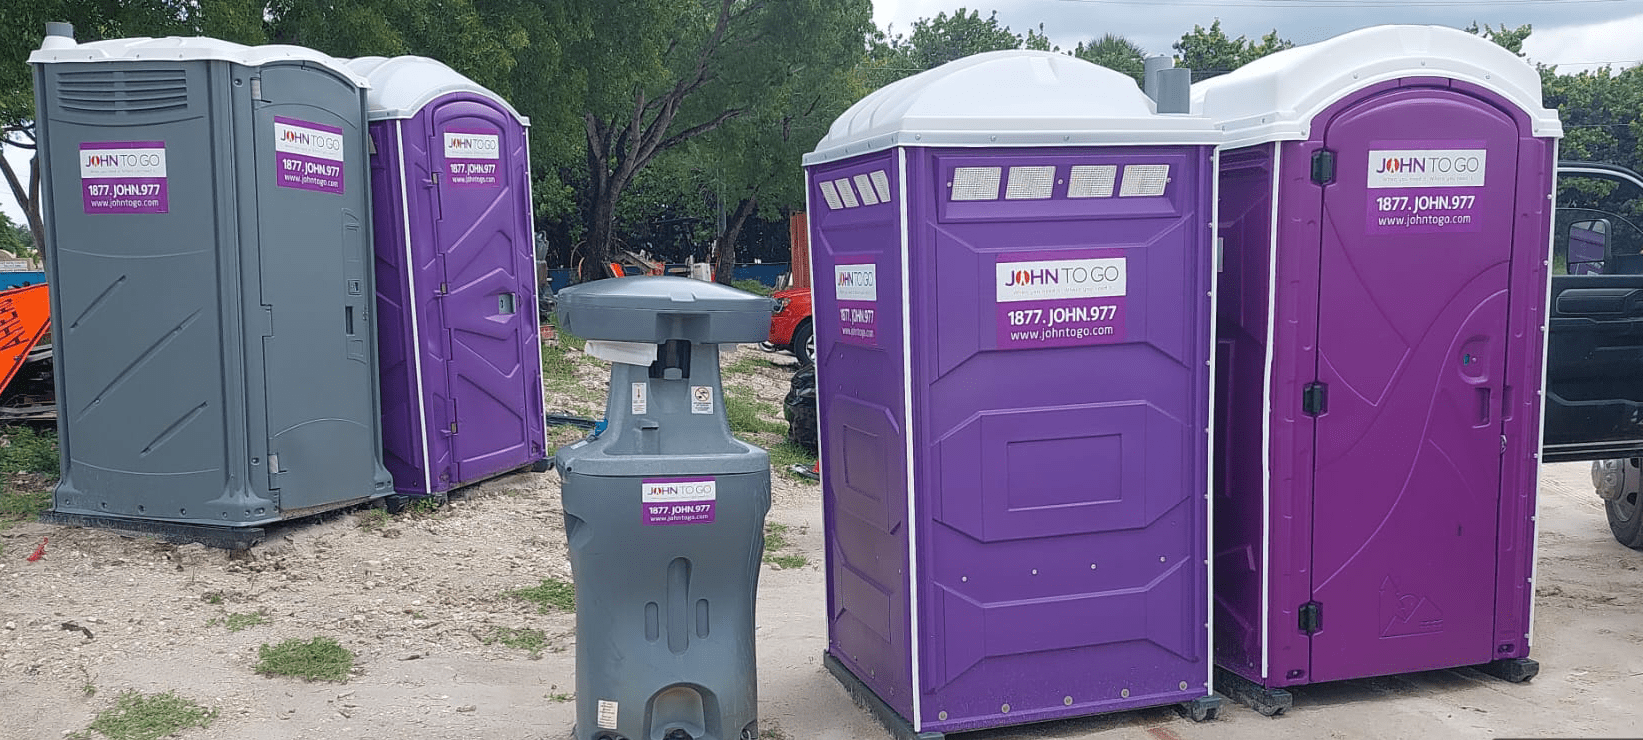 Portable hand washing station amongst construction porta potties